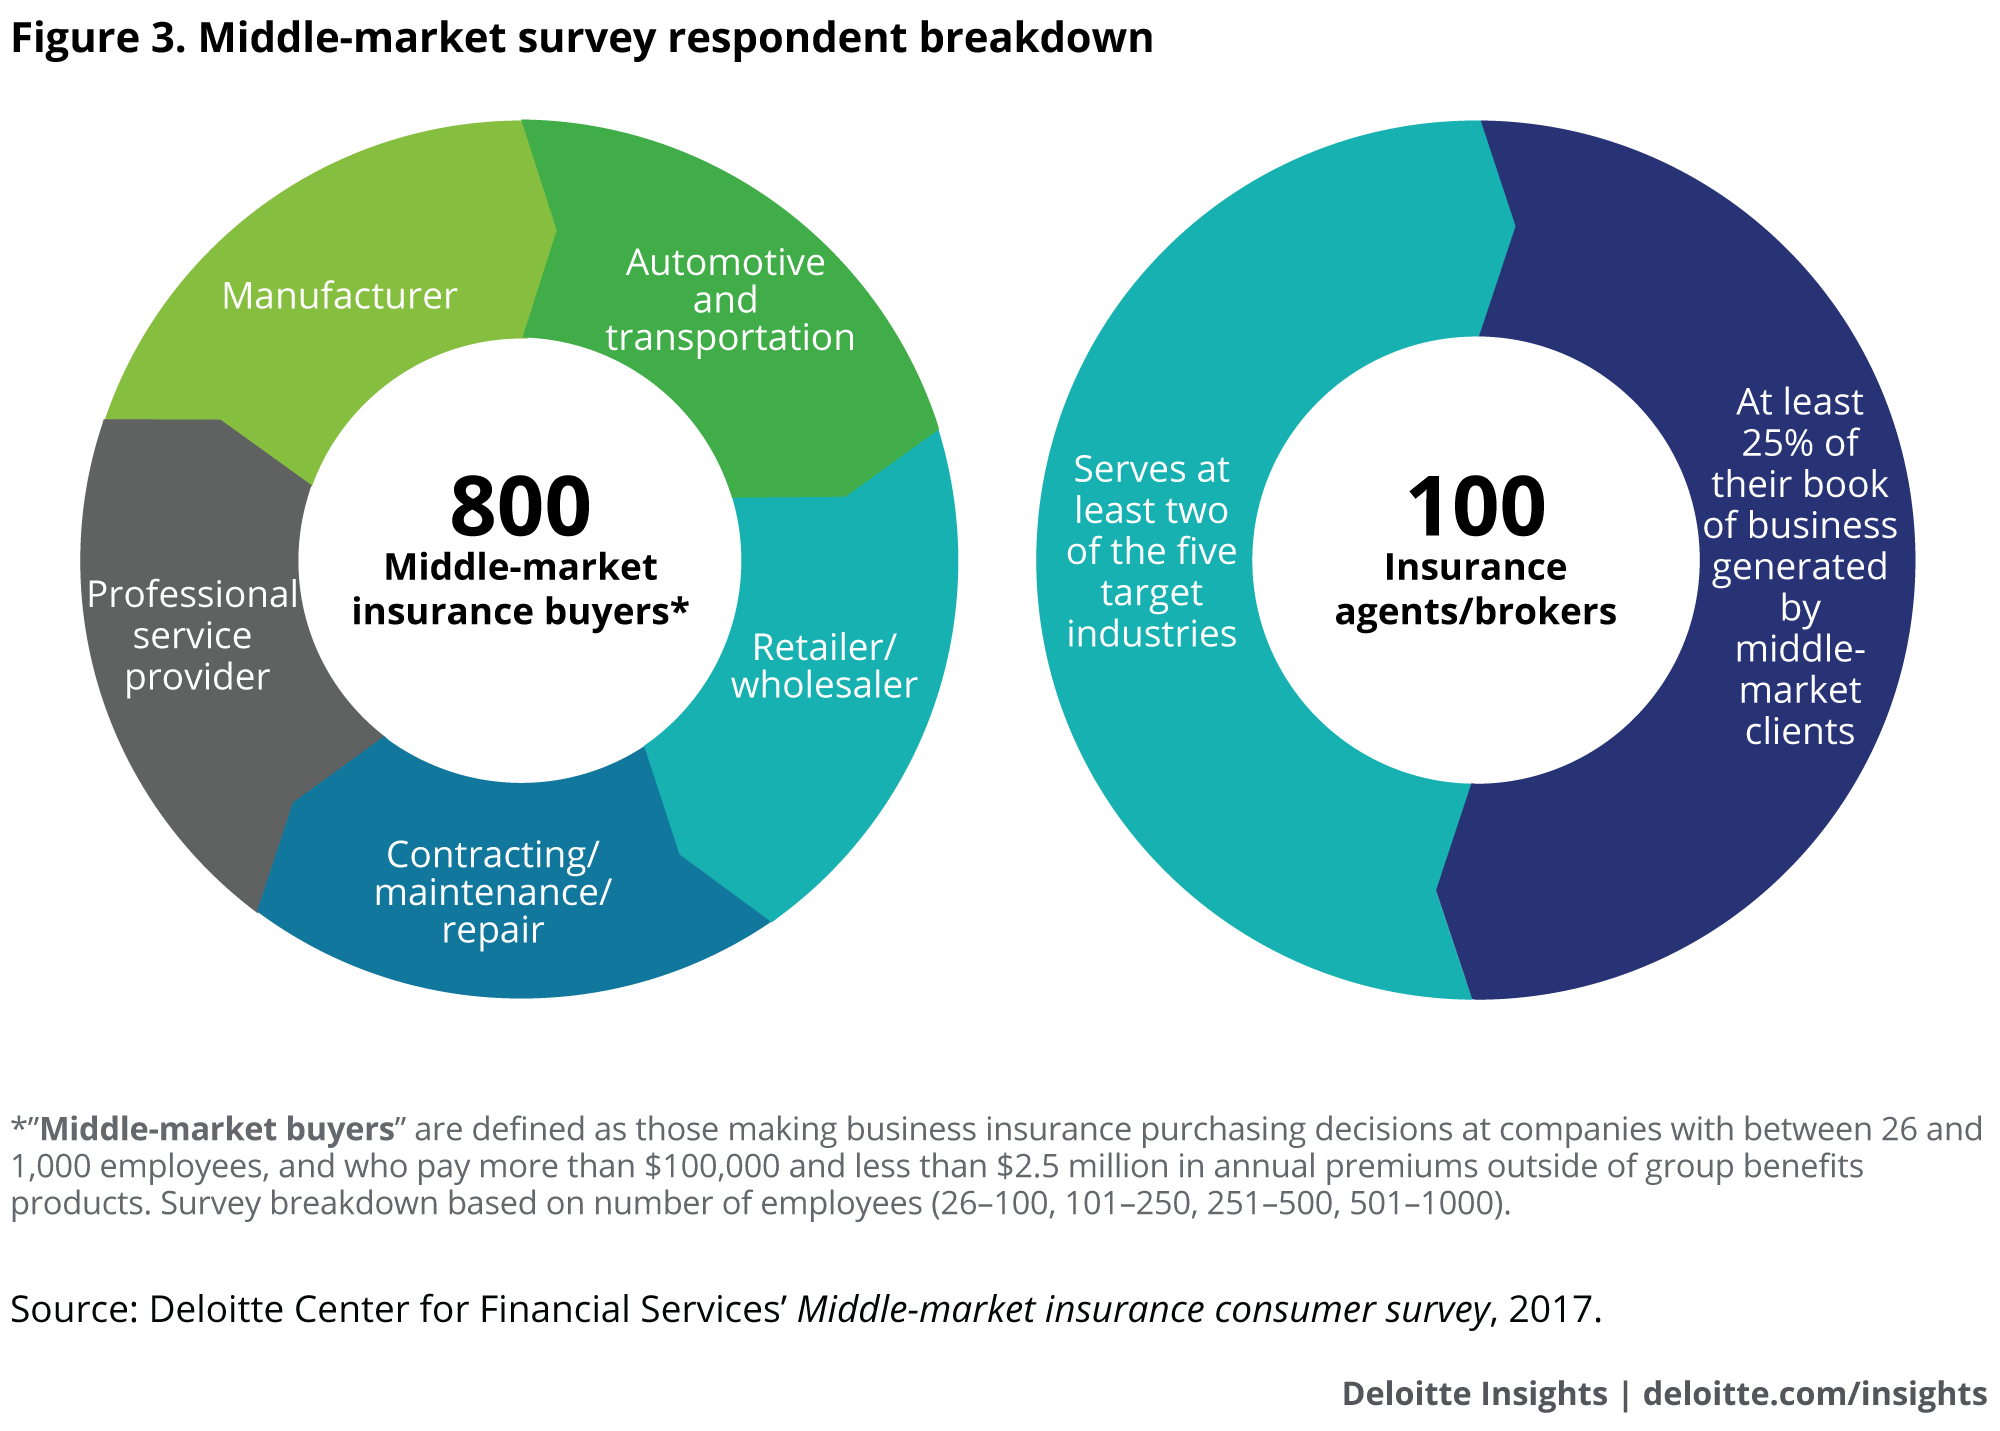 Middle-market survey respondent breakdown